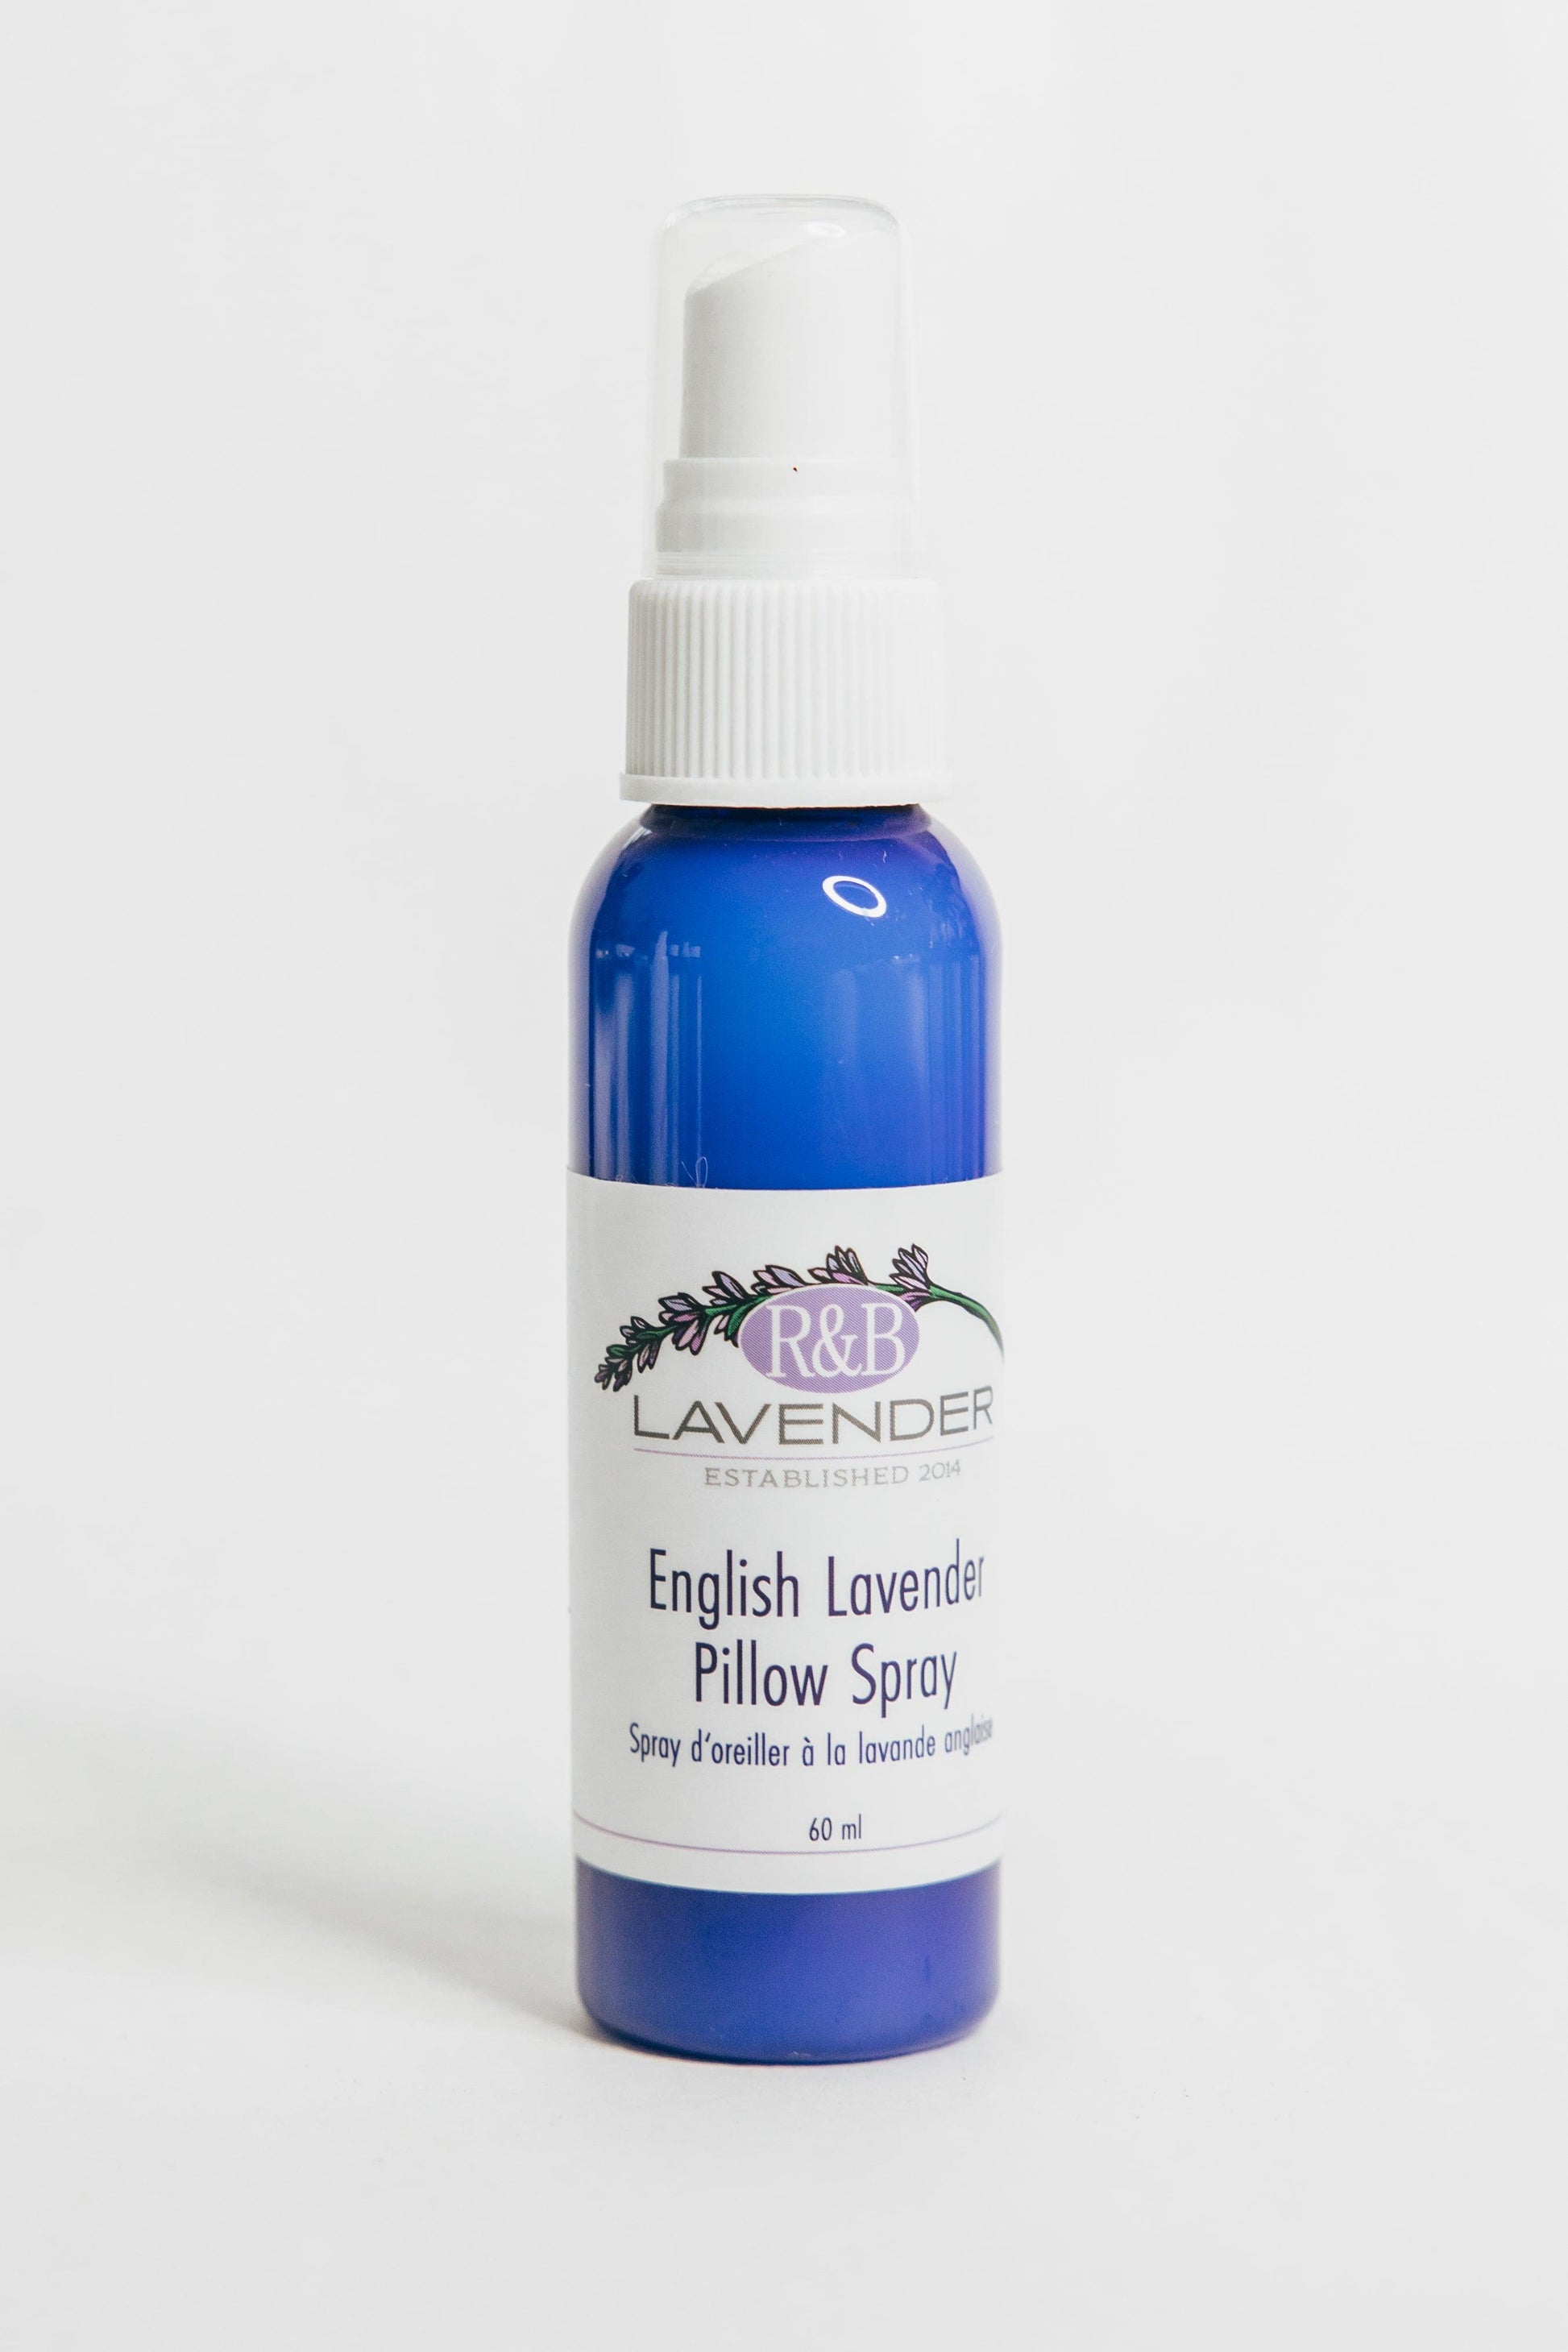 Pillow Spray (English Lavender) - R&B Lavender